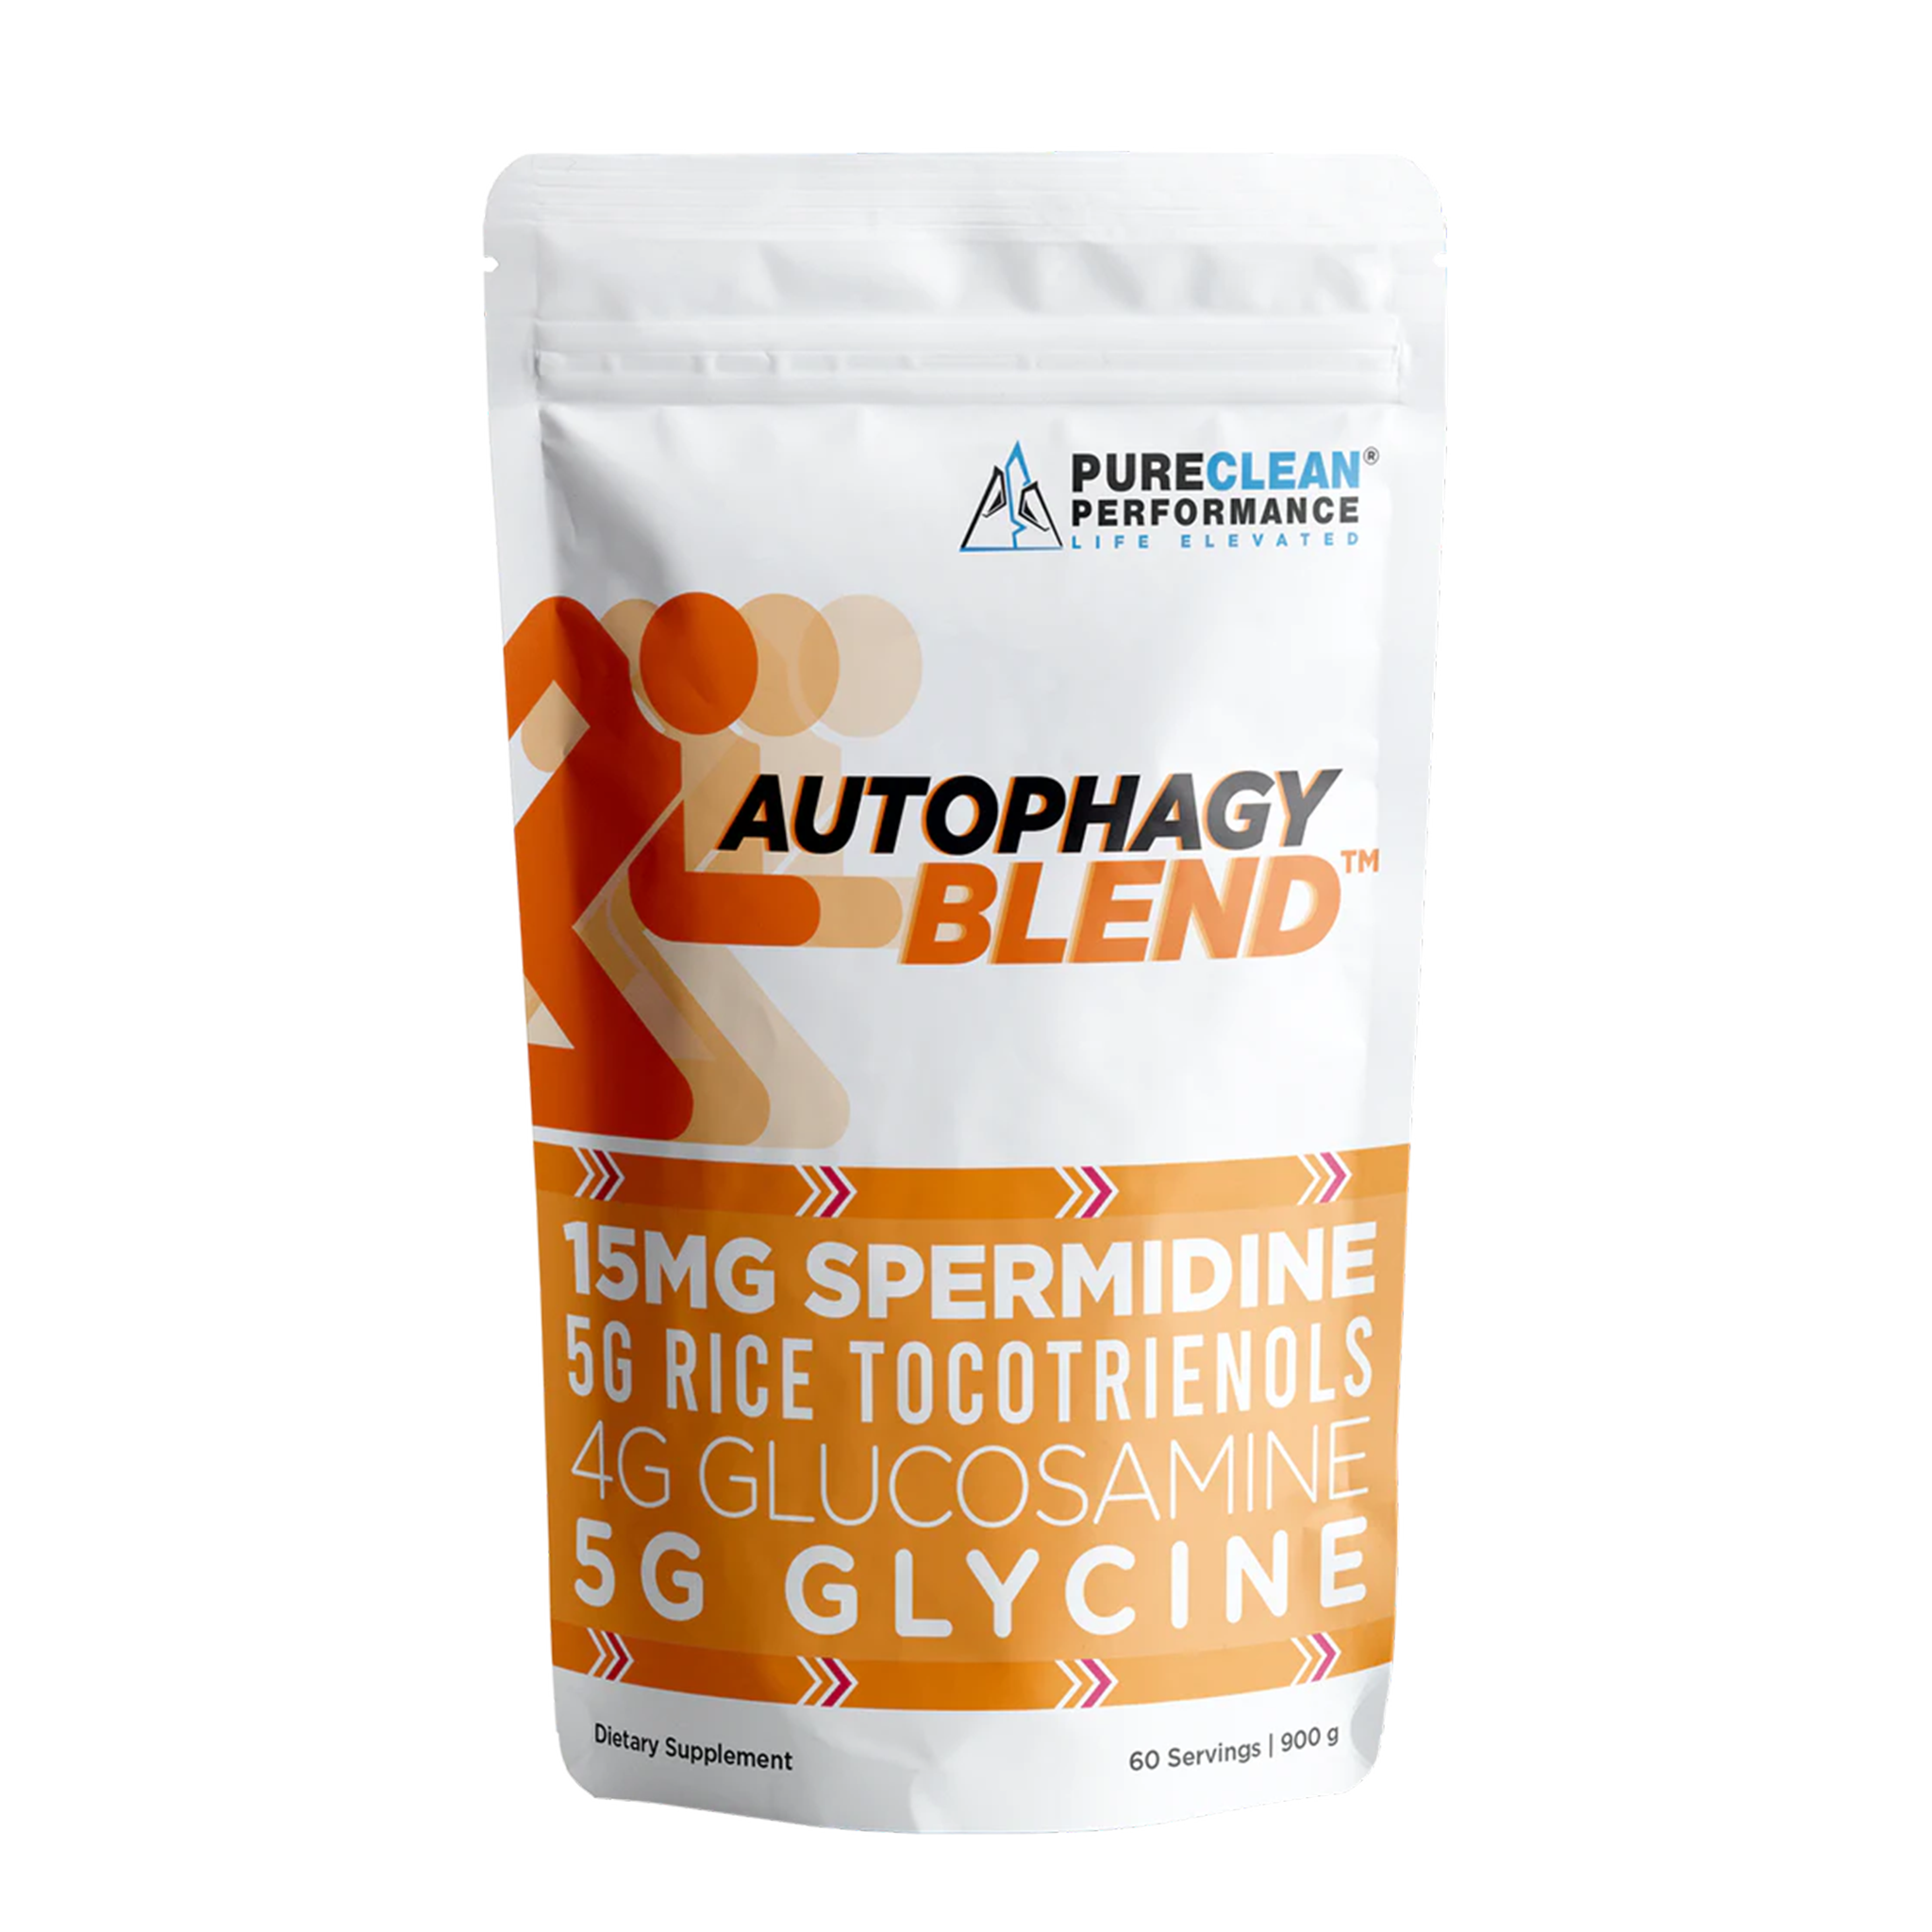 Autophagy Blend - 60 servings- 15mg Spermidine, 5g Glycine, 2g Taurine, 4g Glucosamine